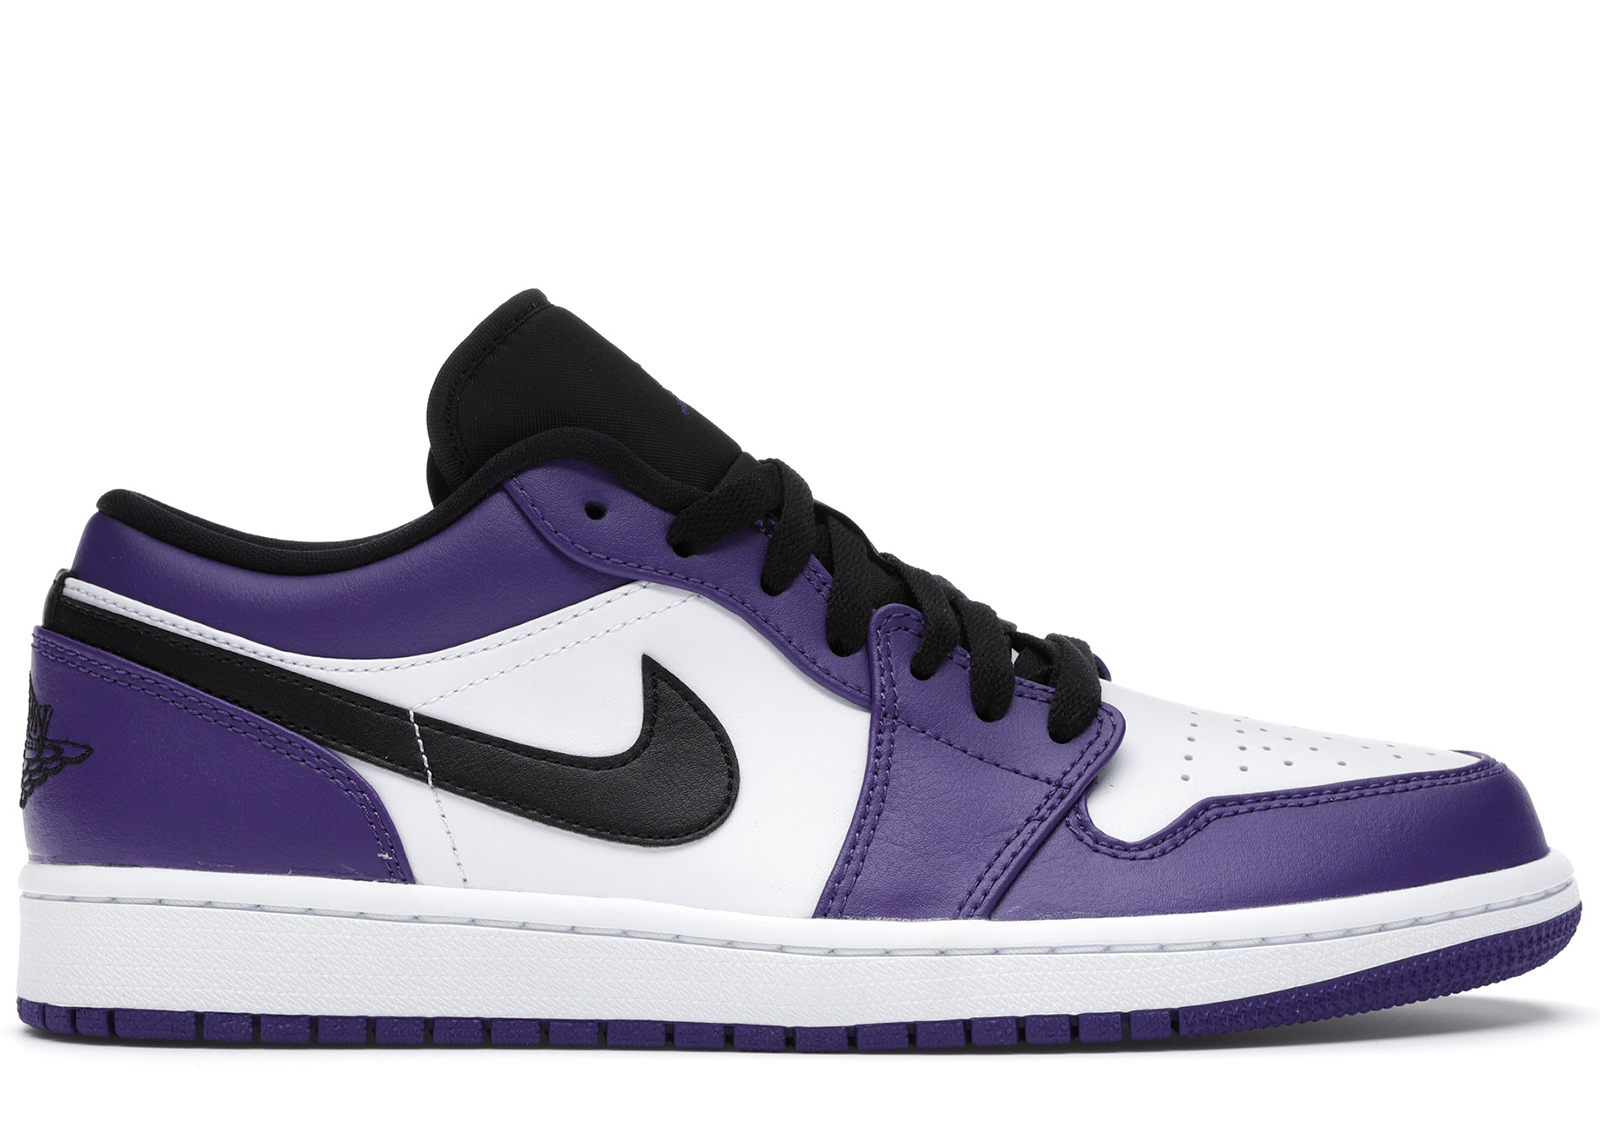 Jordan 1 Low Court Purple White メンズ - 553558-500 - JP